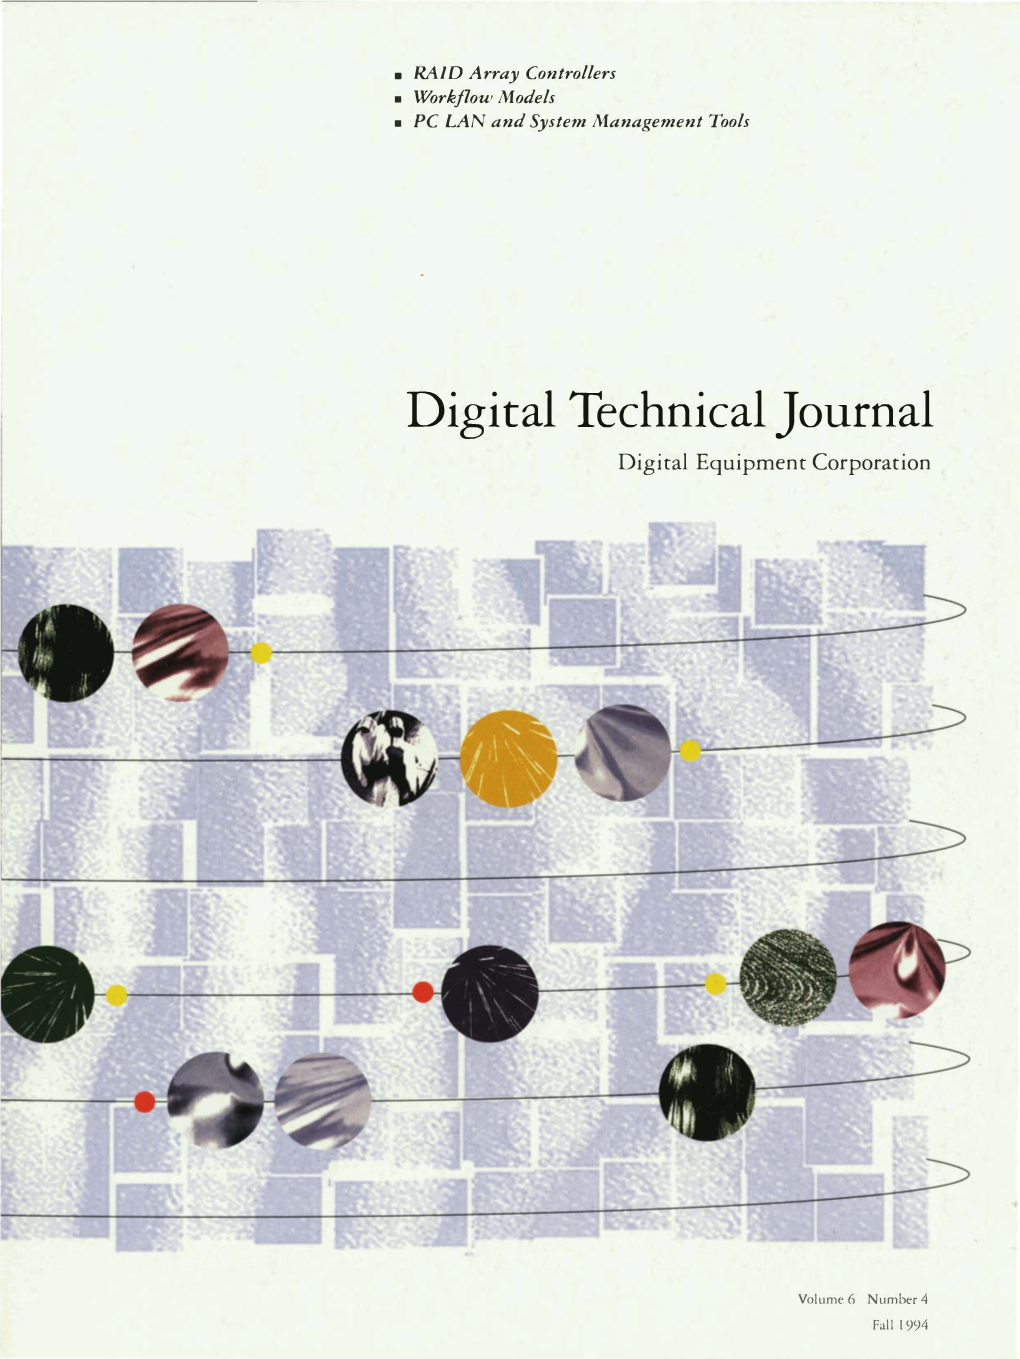 Digital Technical Journal, Volume 6, Number 4